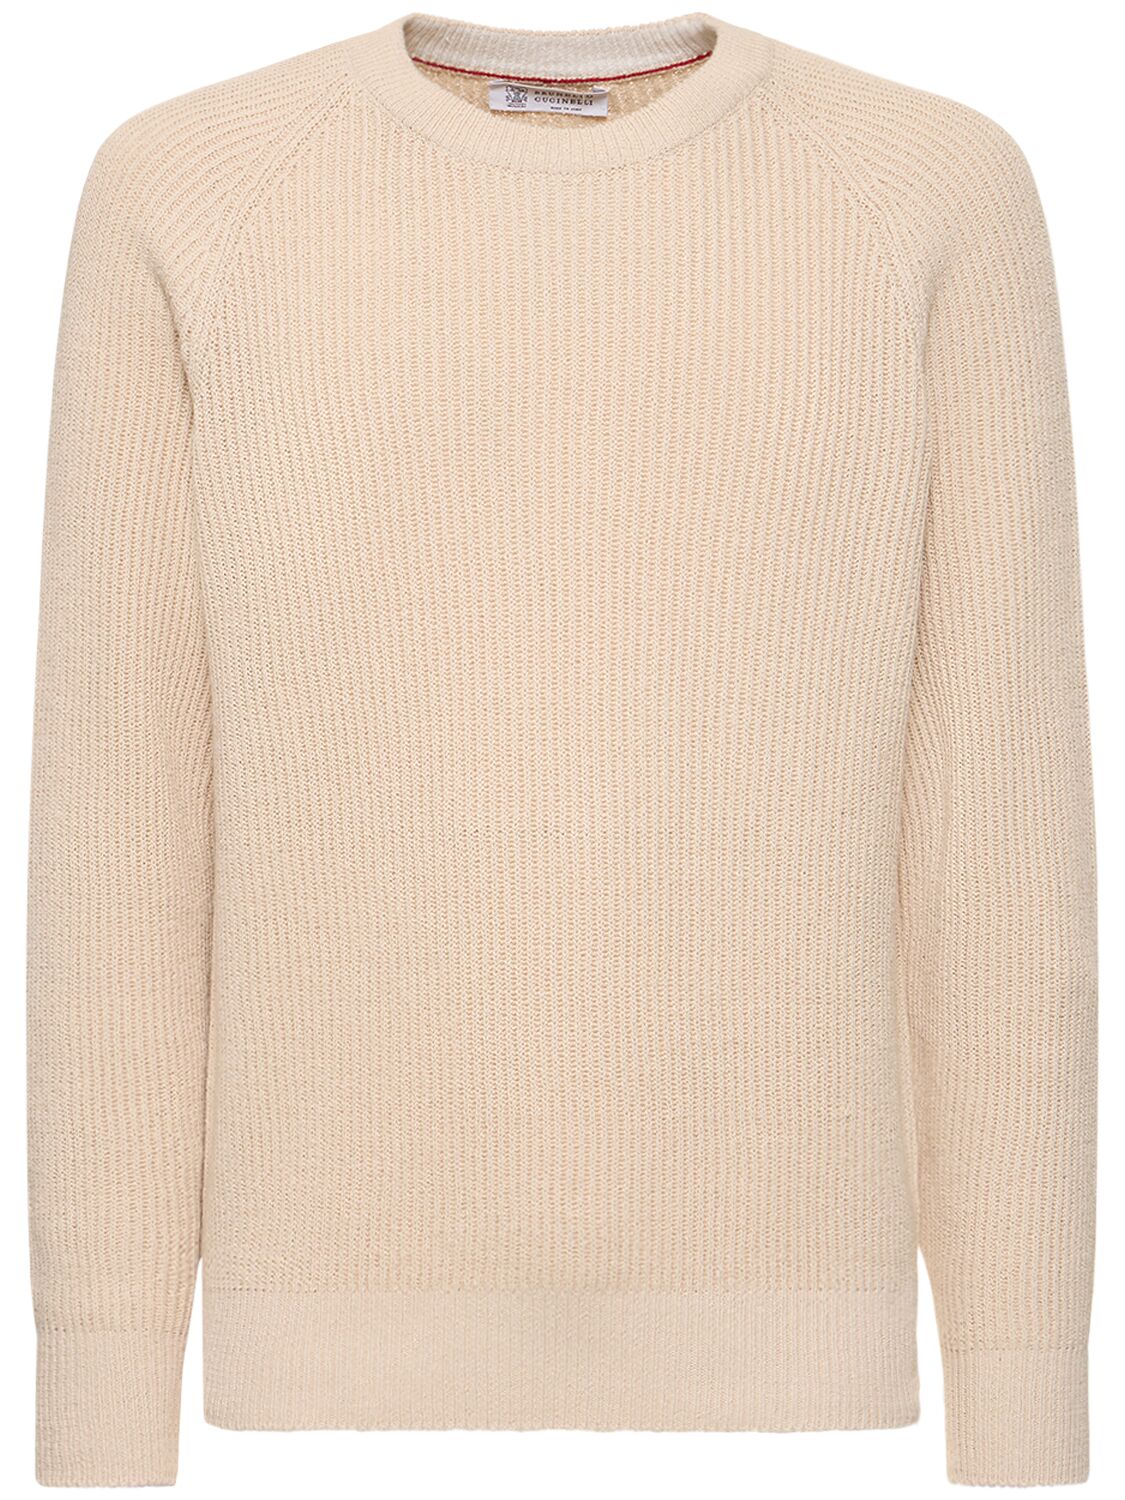 Cotton Knit Crewneck Sweater